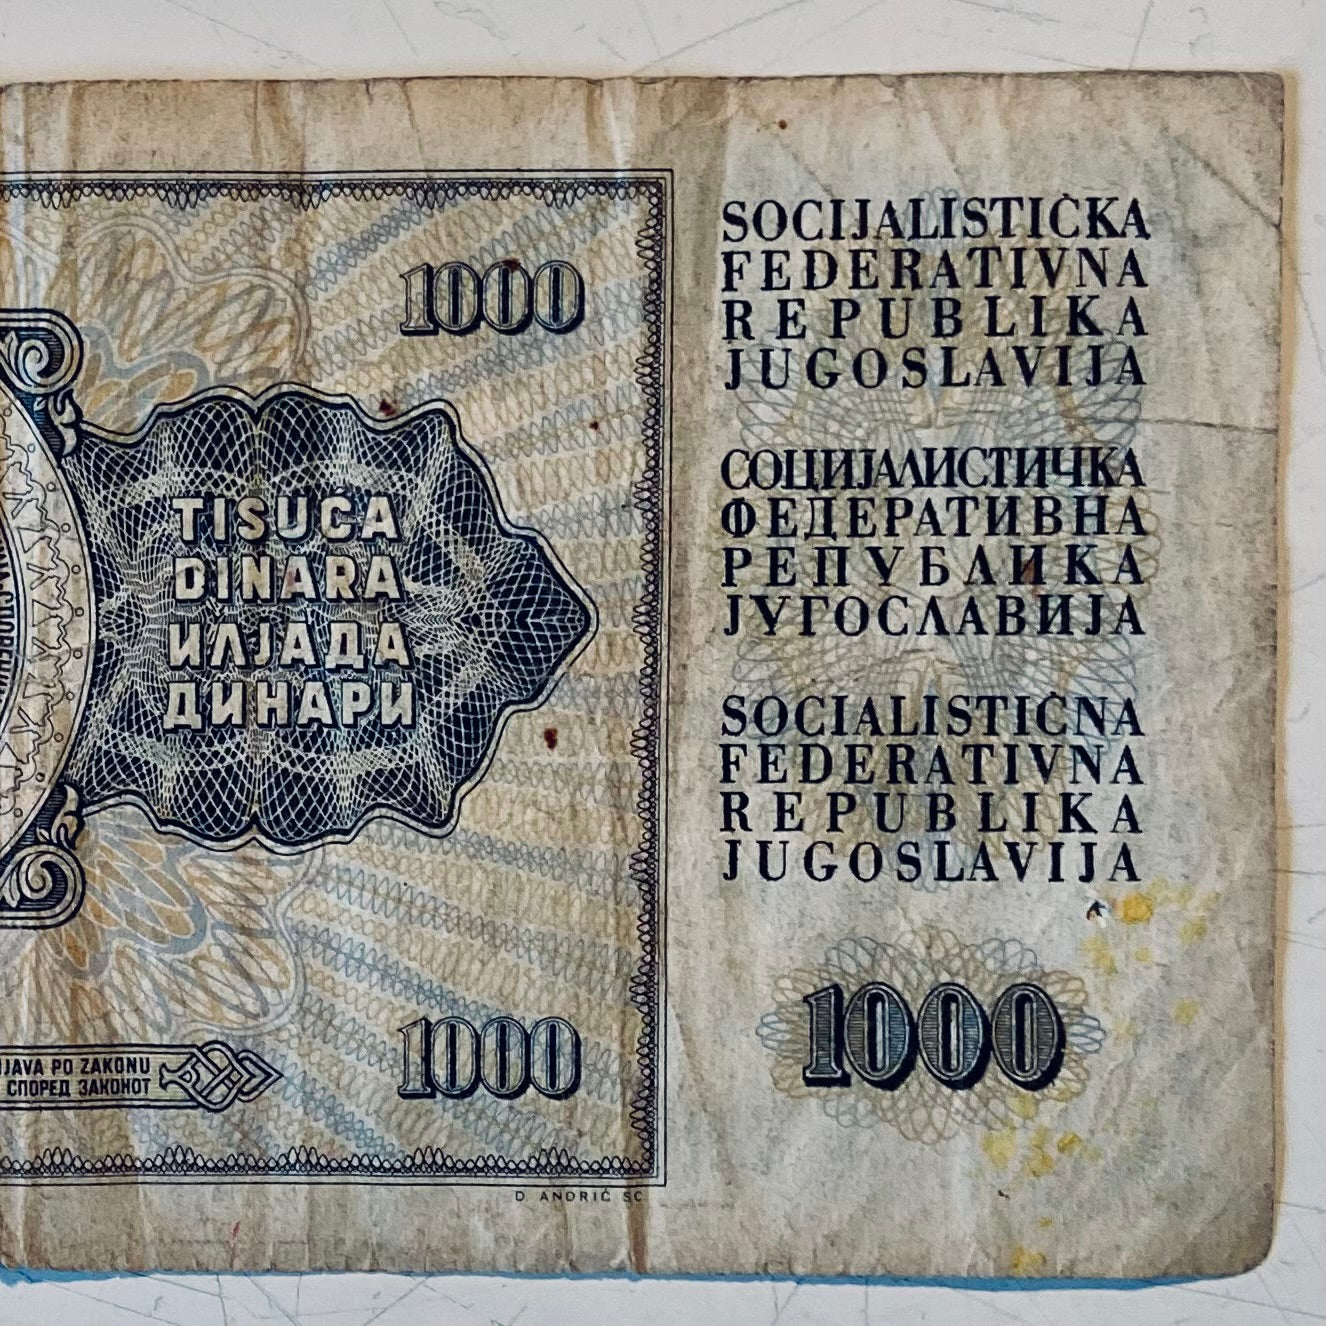 Currency, 1.000 Dinar, Socialist Federal Republic of Yugoslavia, 1978